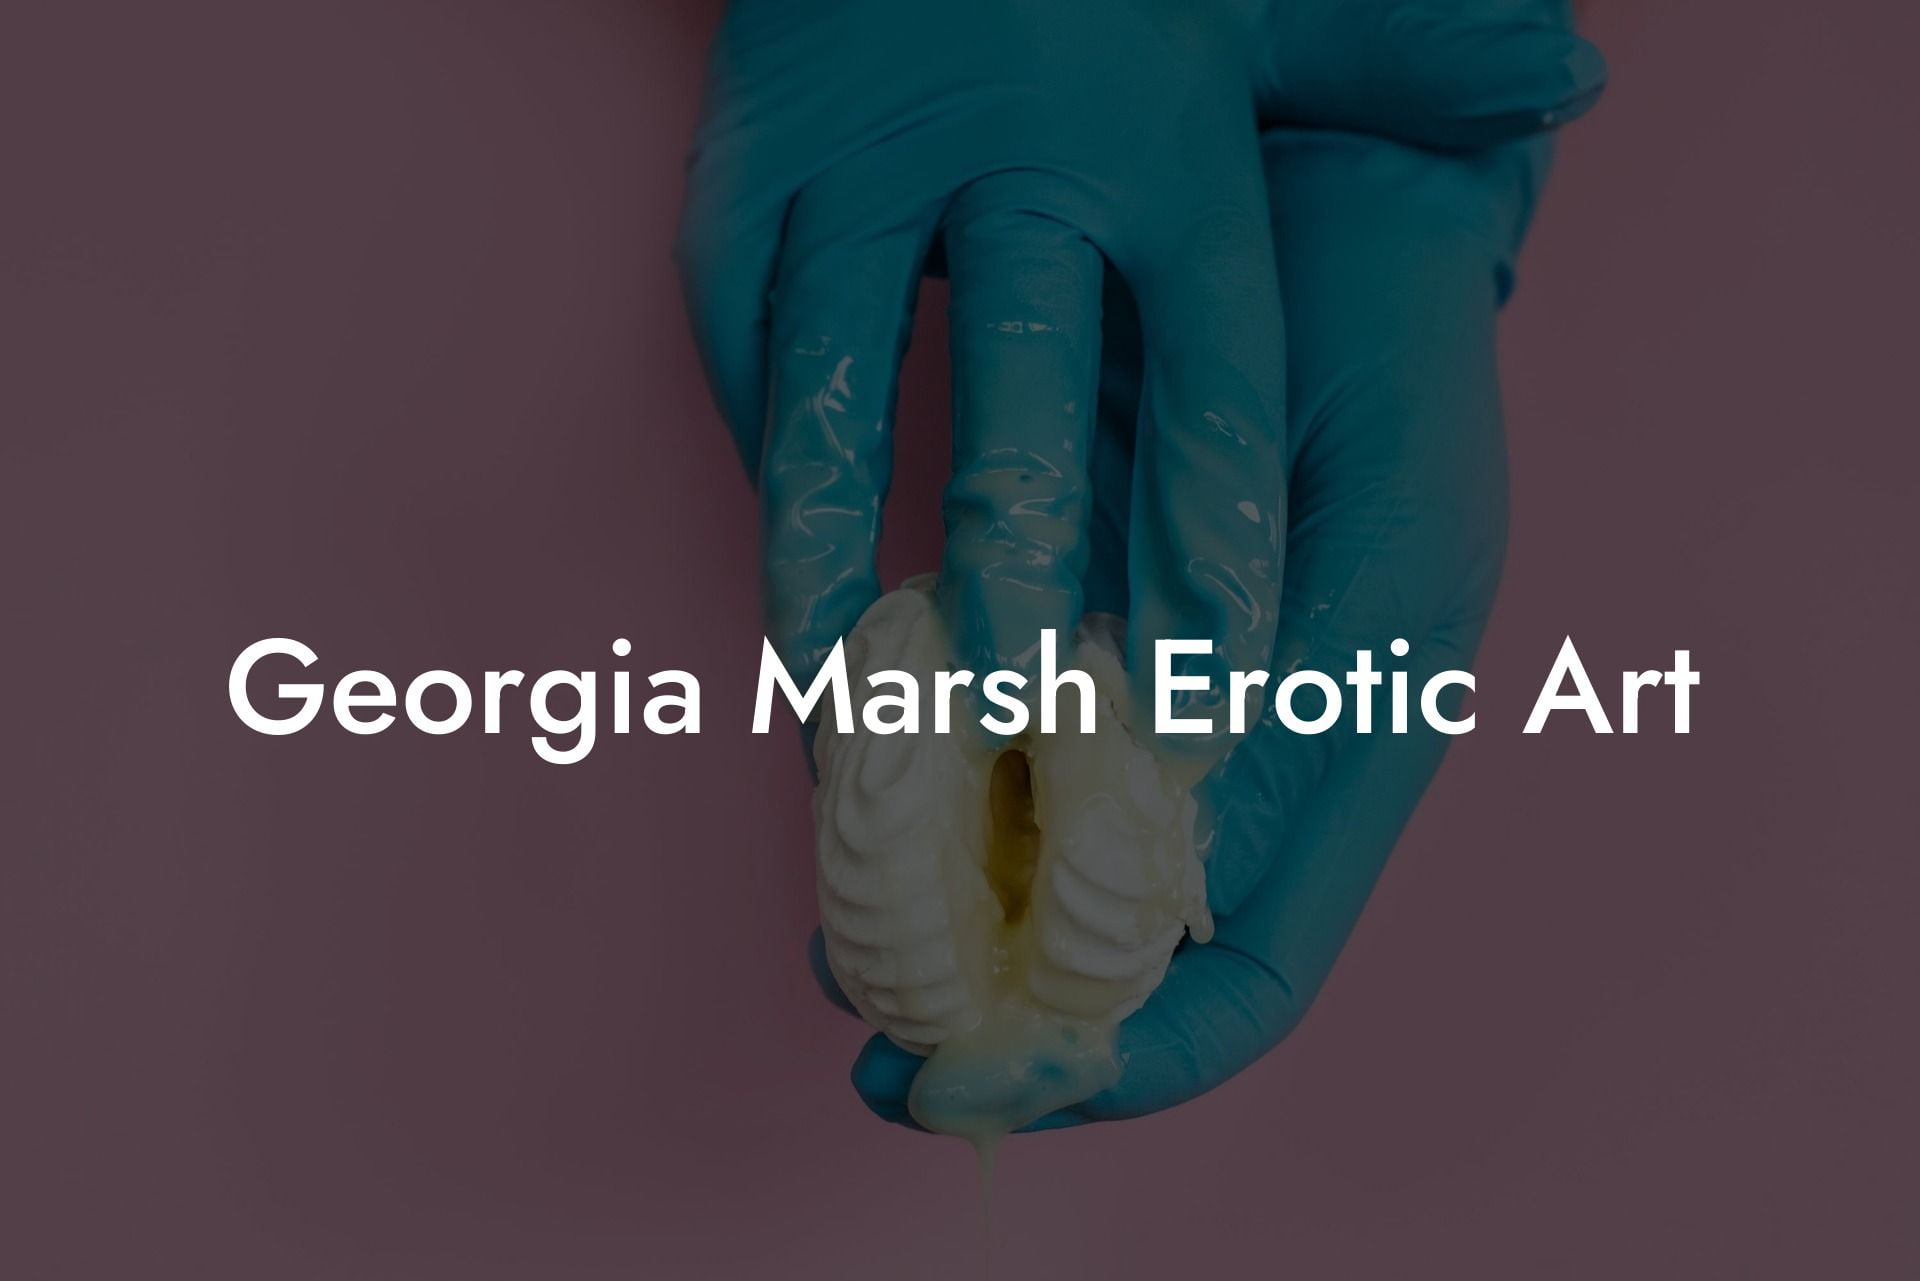 Georgia Marsh Erotic Art